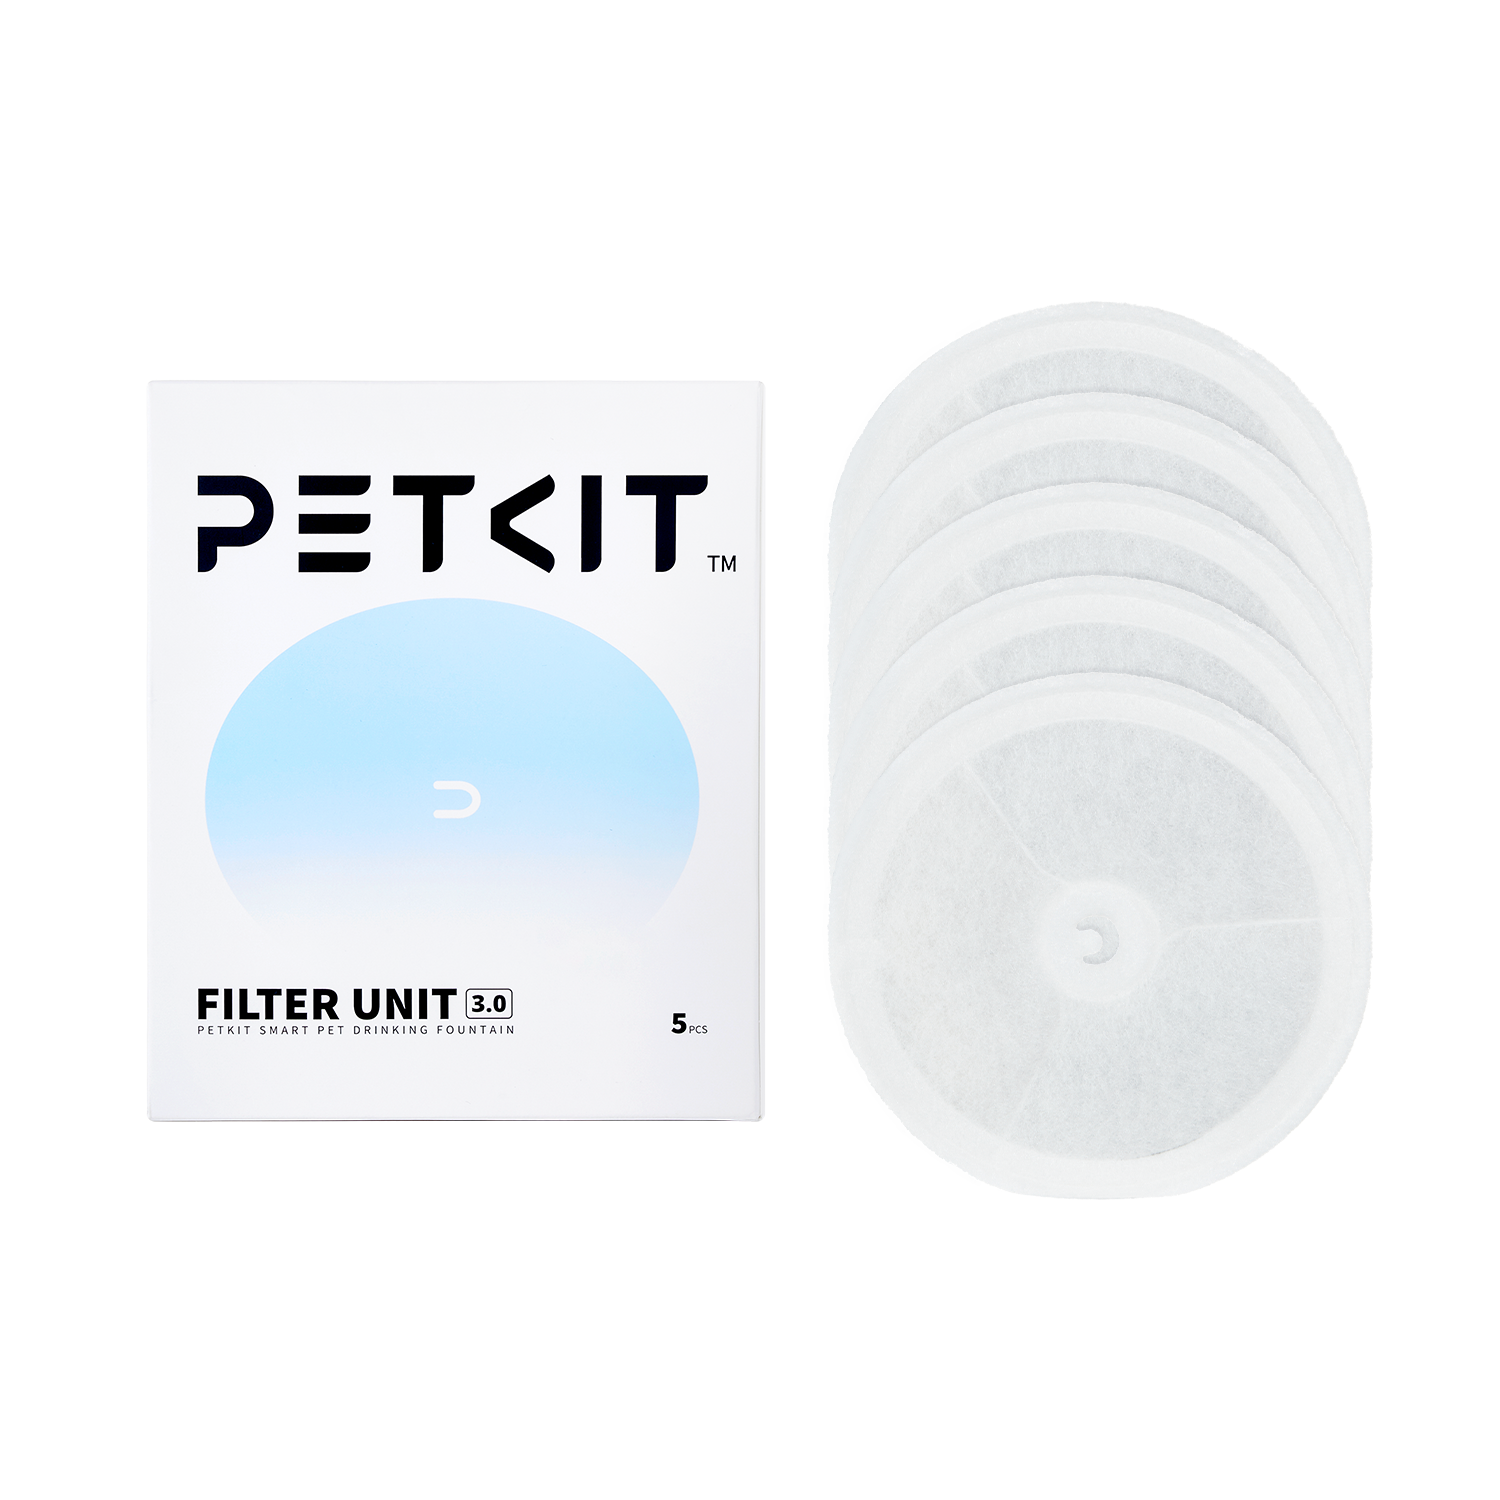 PETKIT Filter Unit 3.0